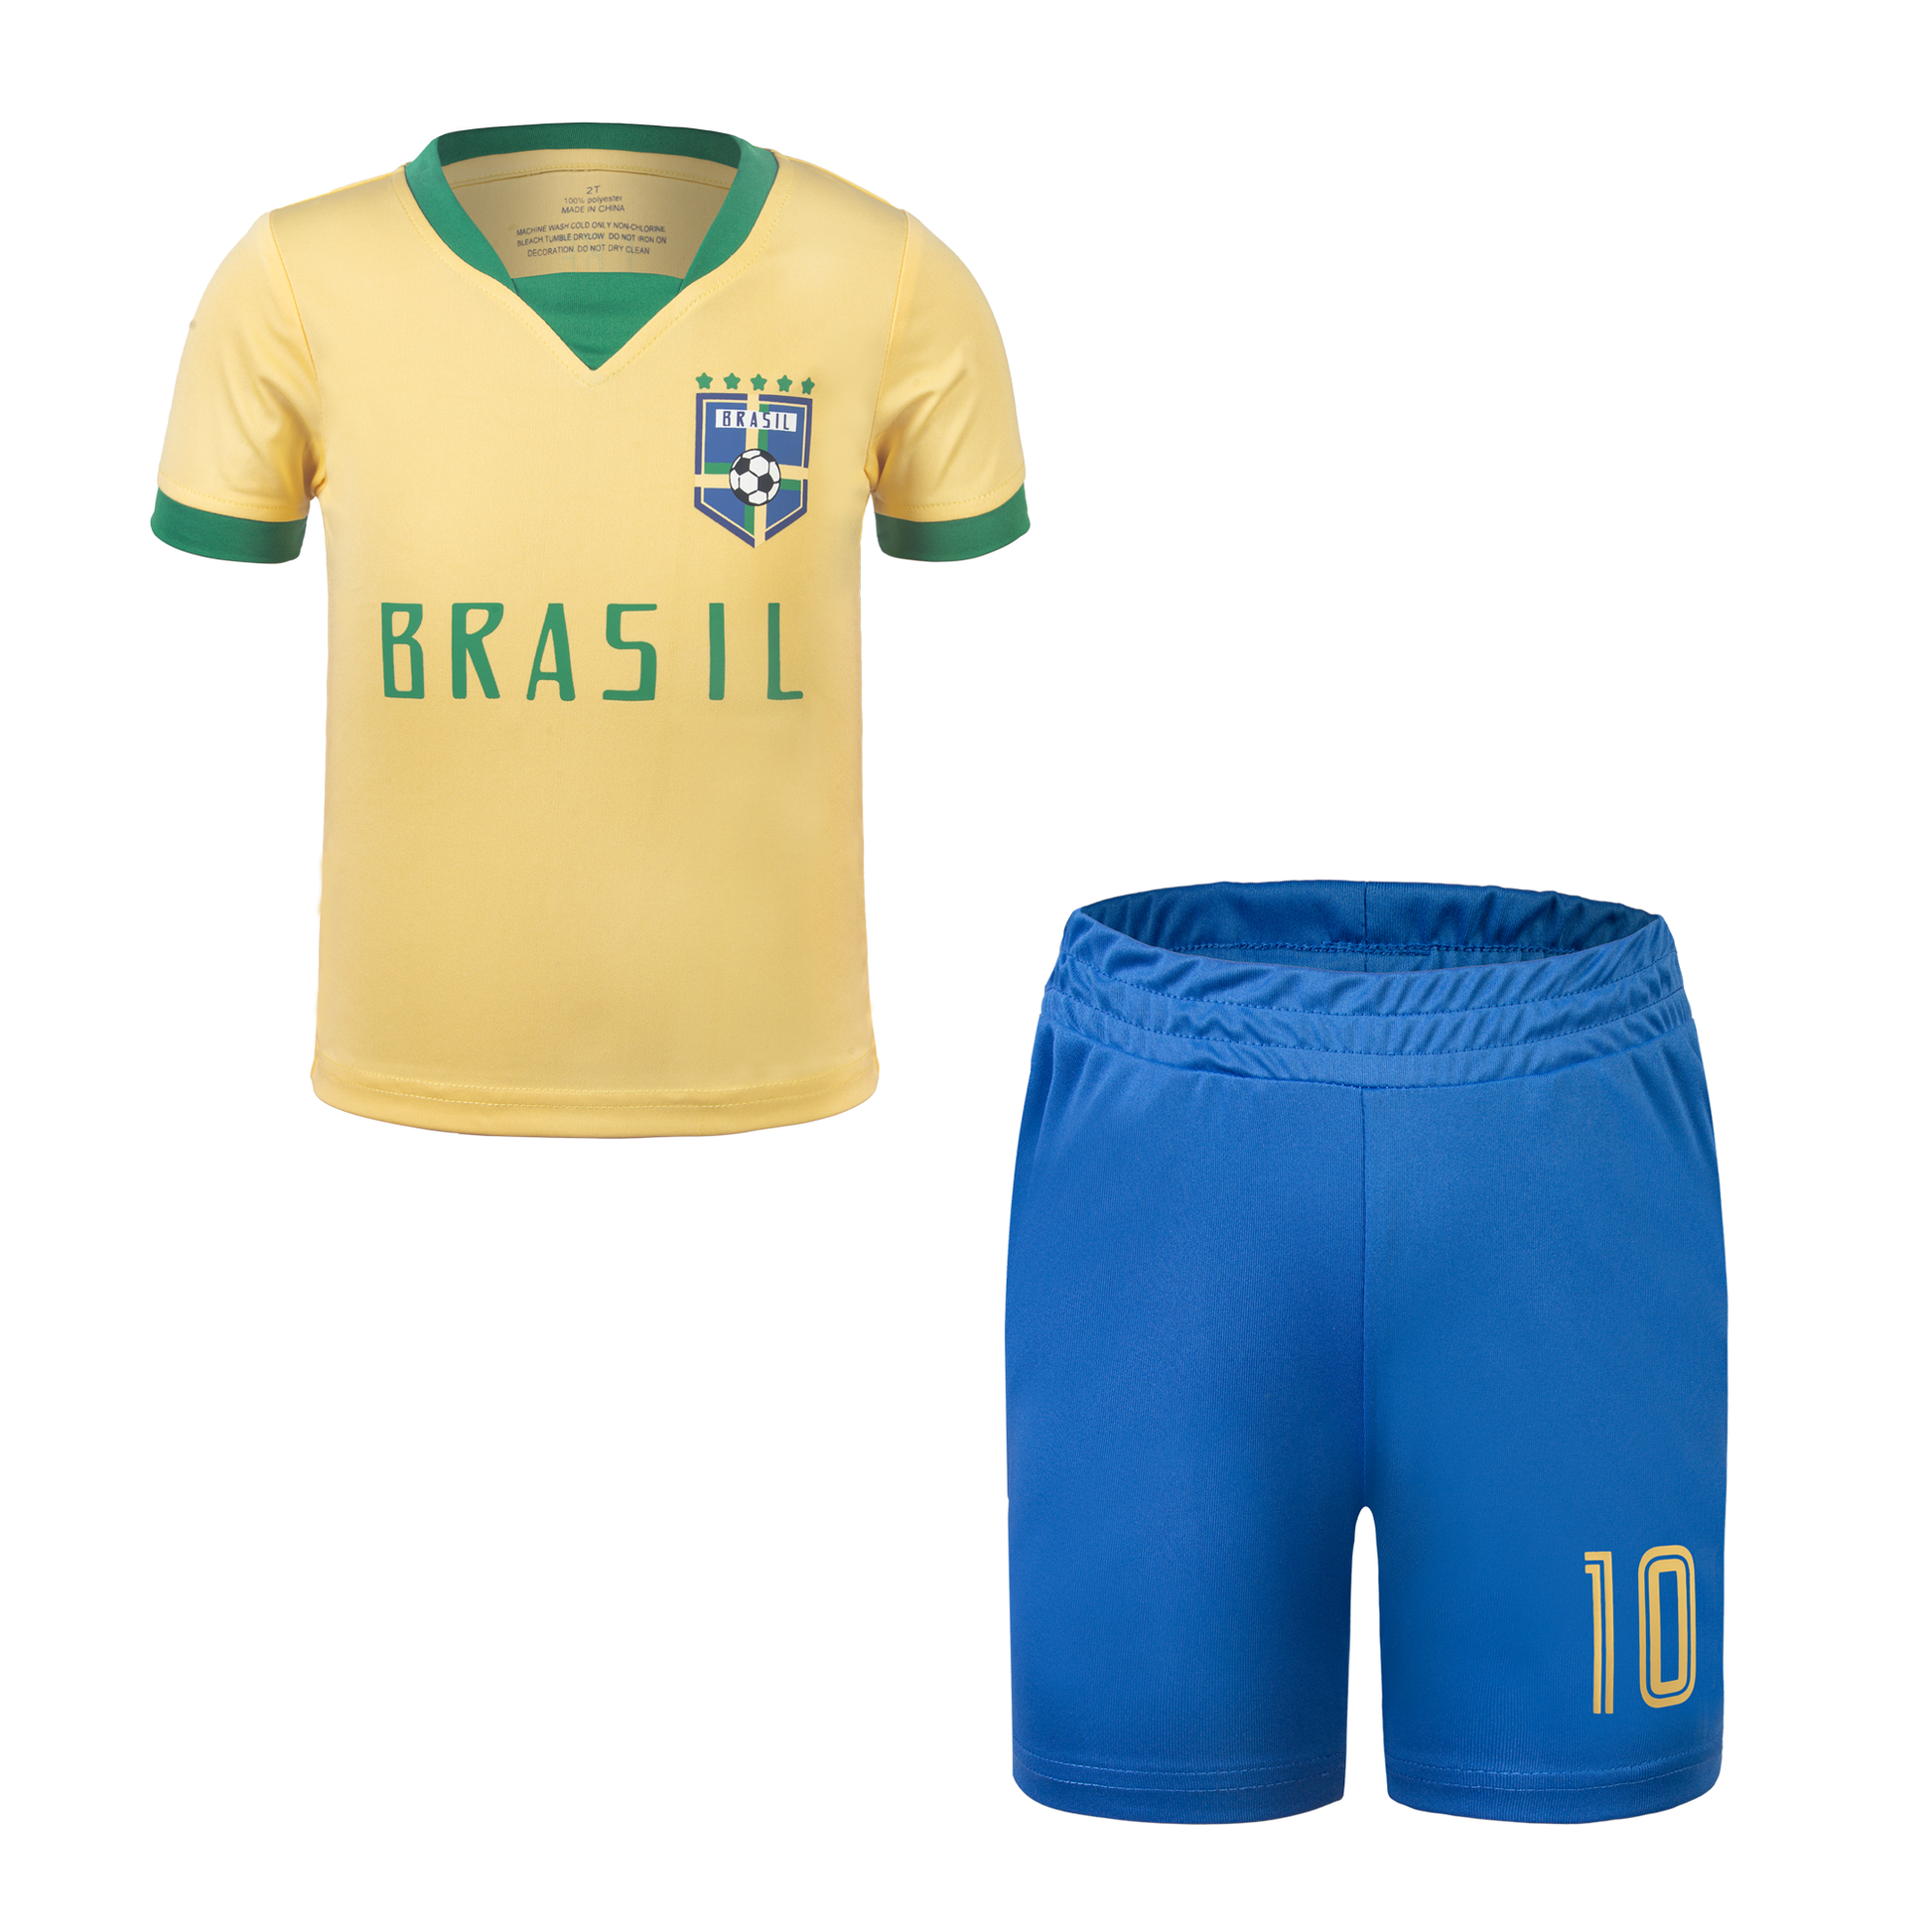 Brazil jersey,Brazil jersey for girls,Brazil football jersey for